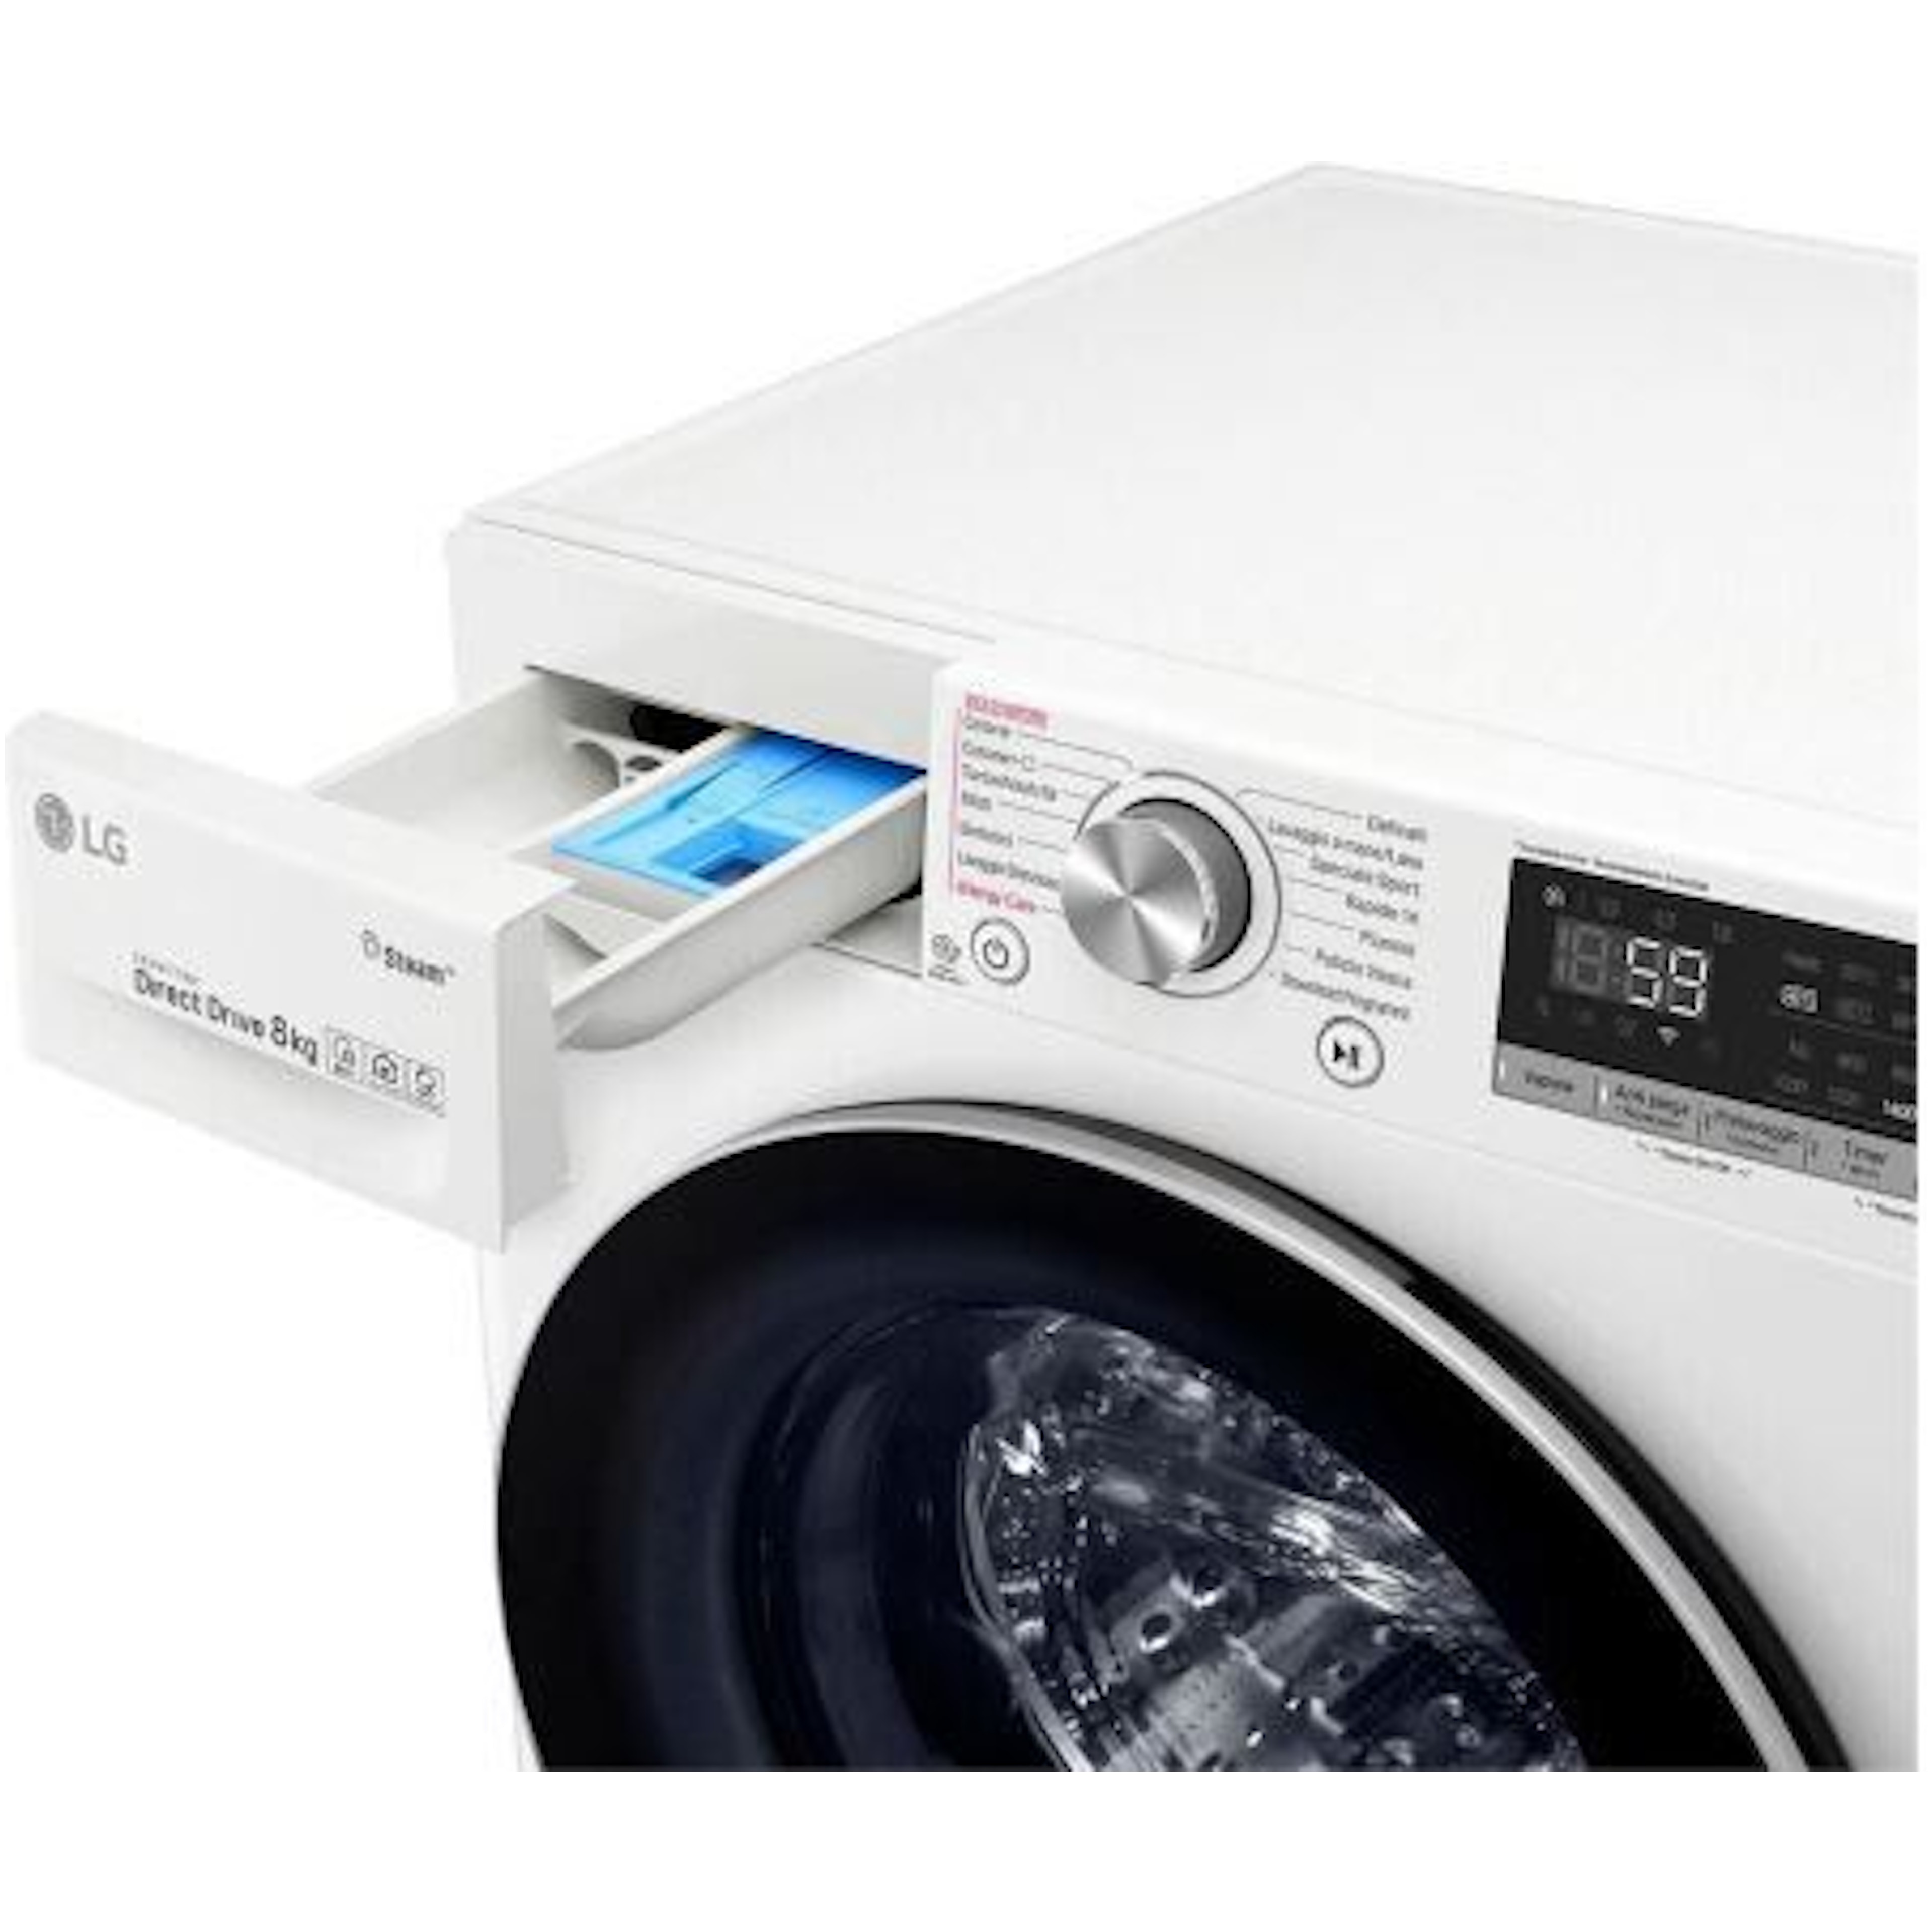 LG wasmachine  GC3V508S1 afbeelding 4